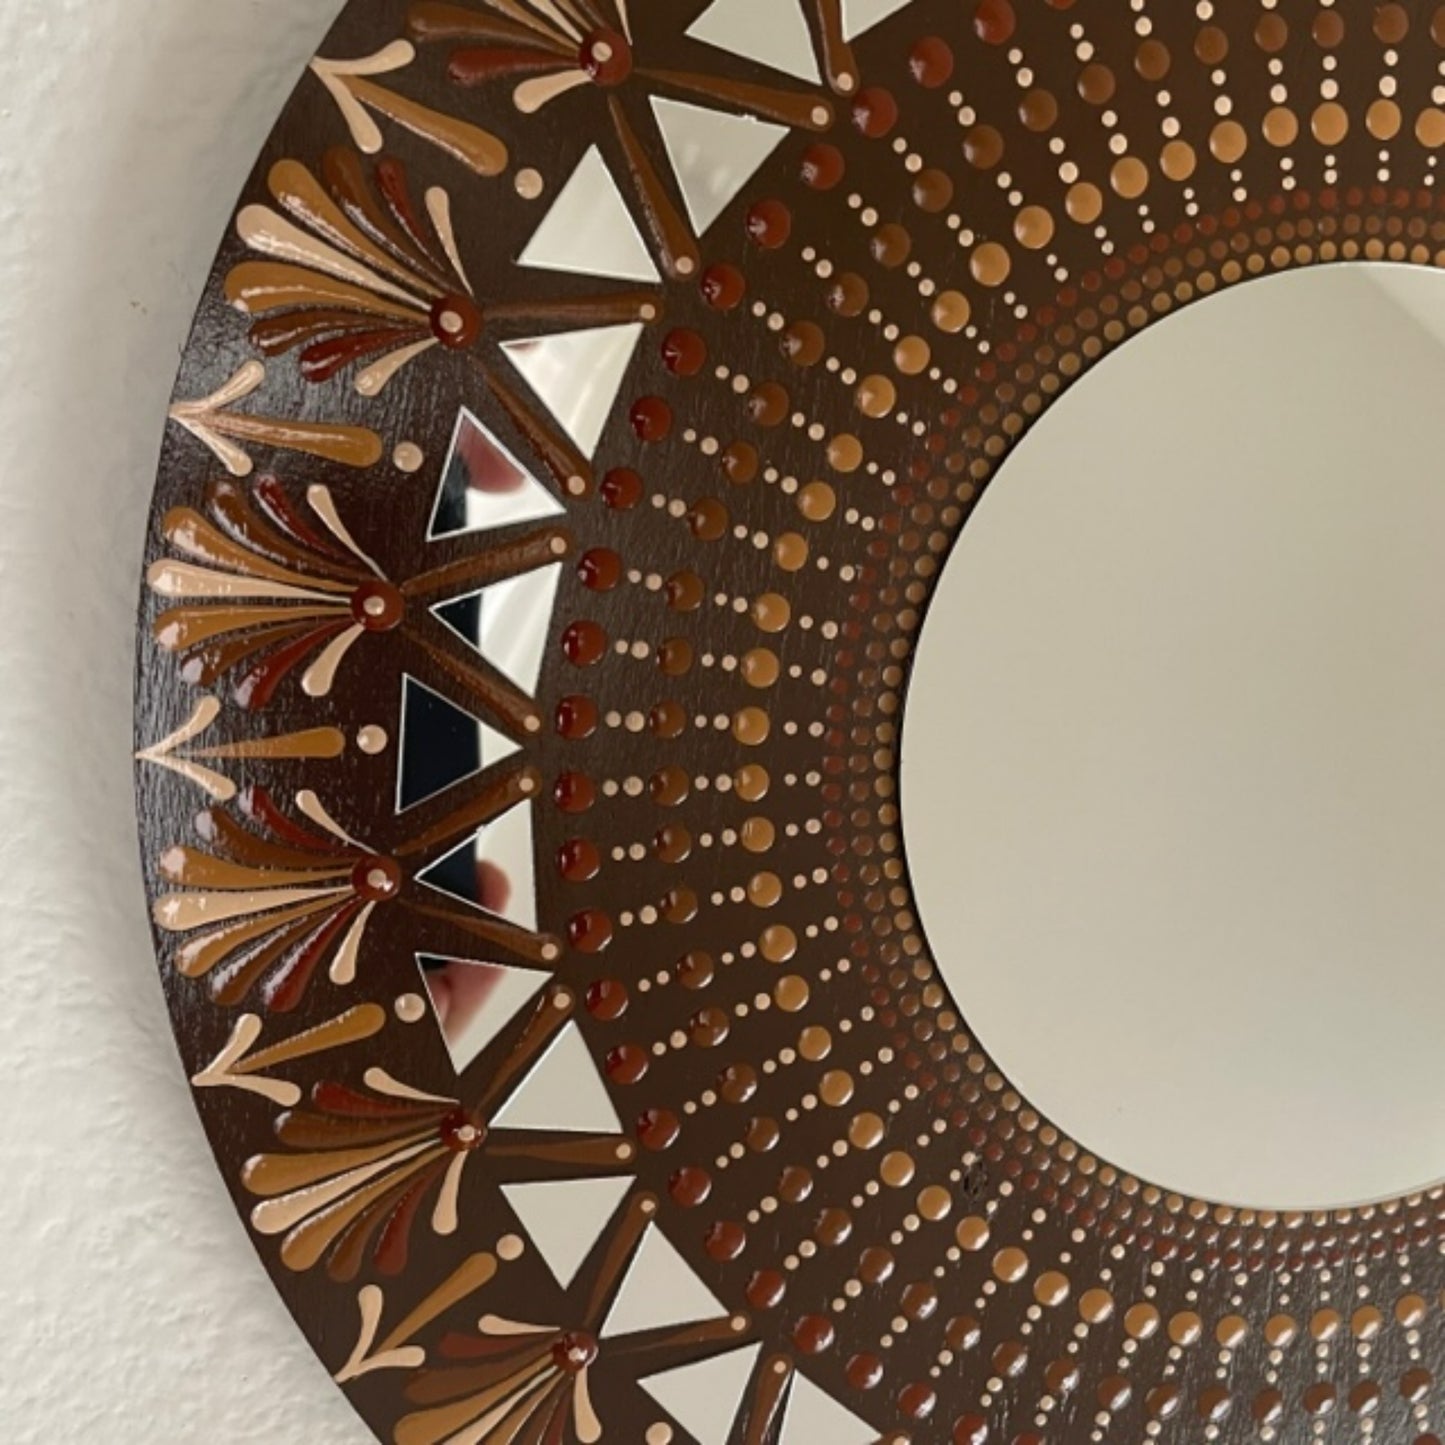 Brown and Tan Mirror Dot Art Mandala Handmade Acrylic Painting Wall Art Decor